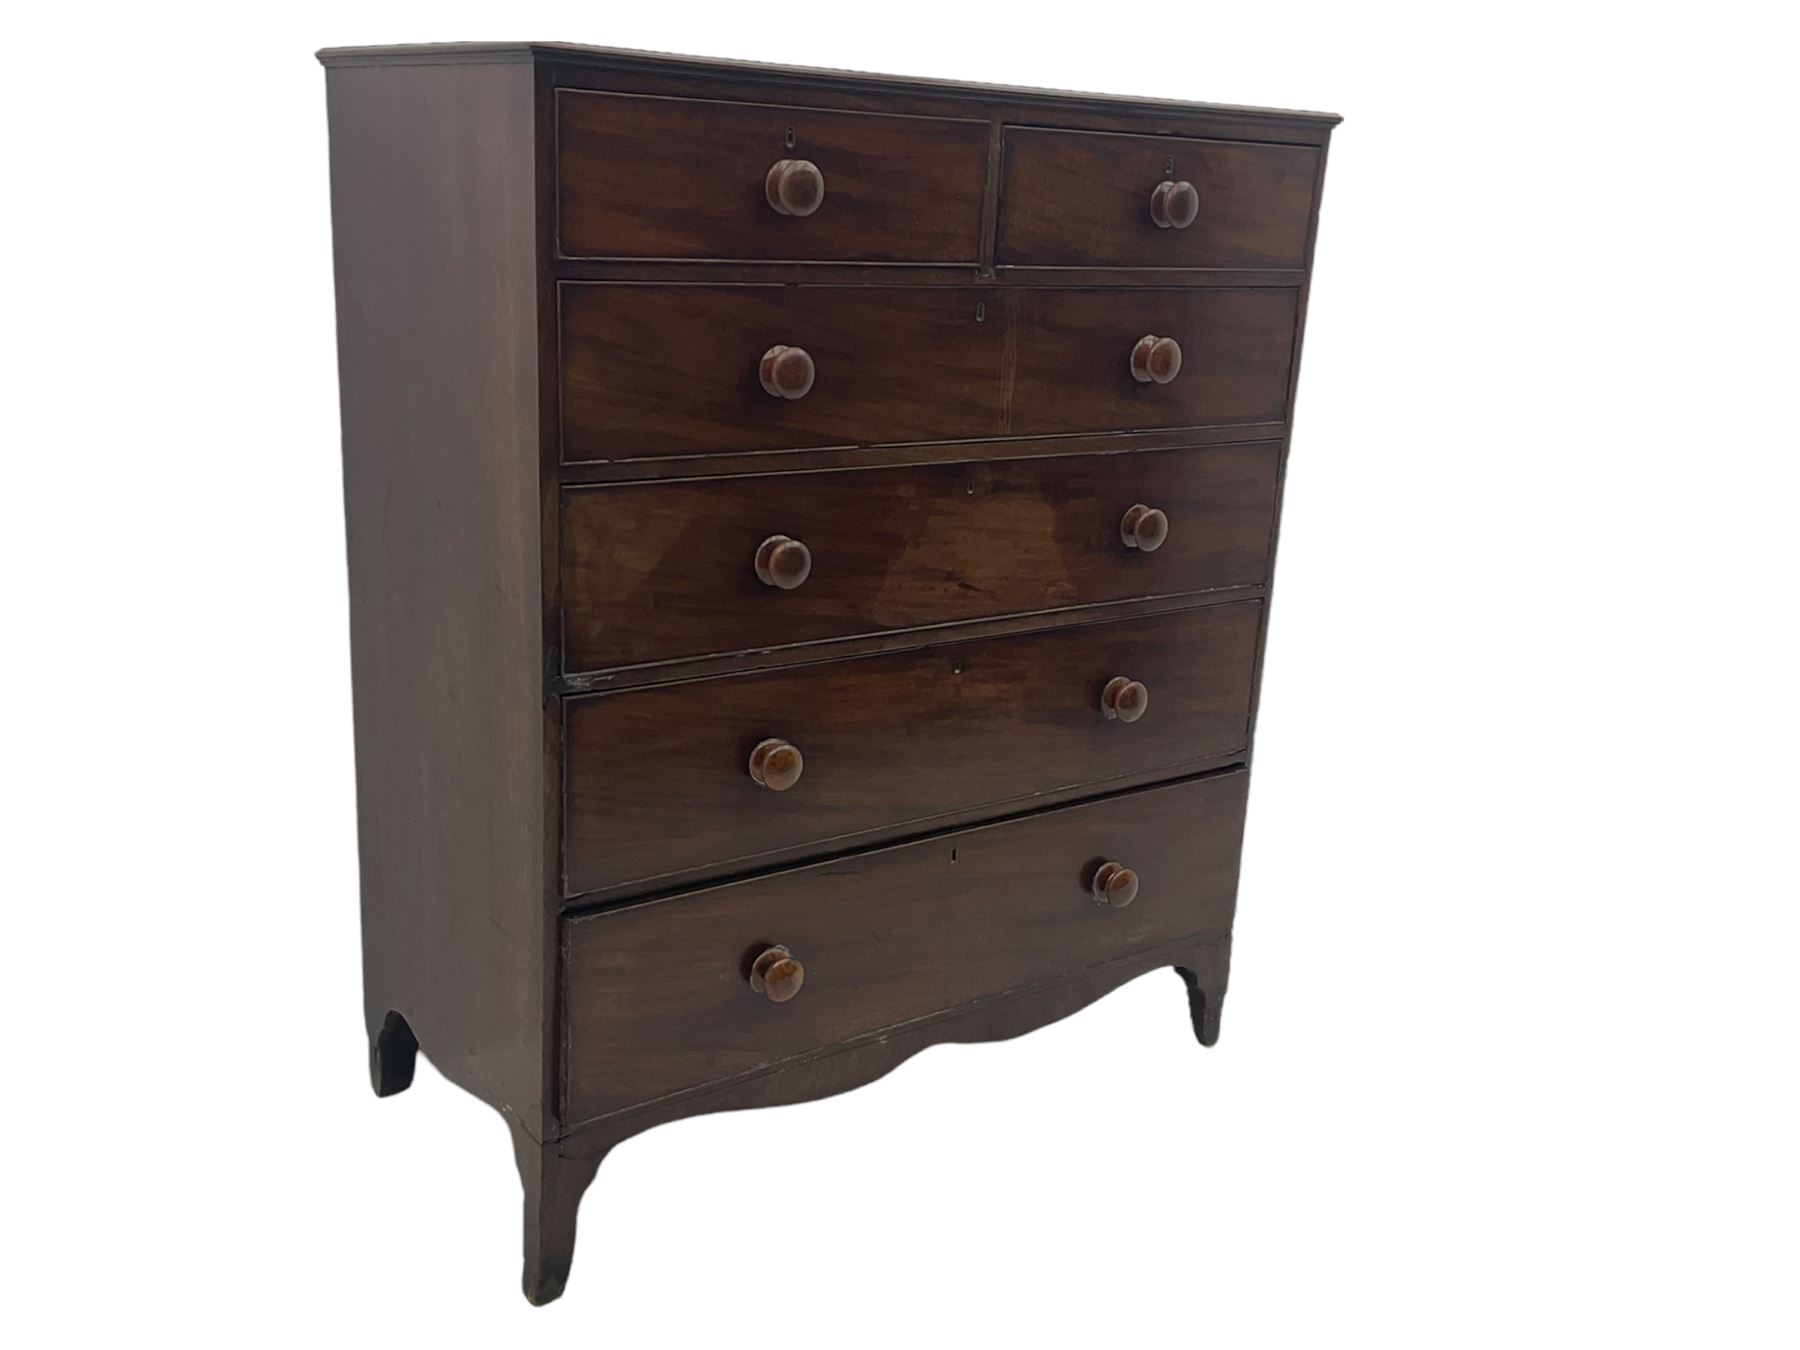 19th century mahogany chest - Image 2 of 8